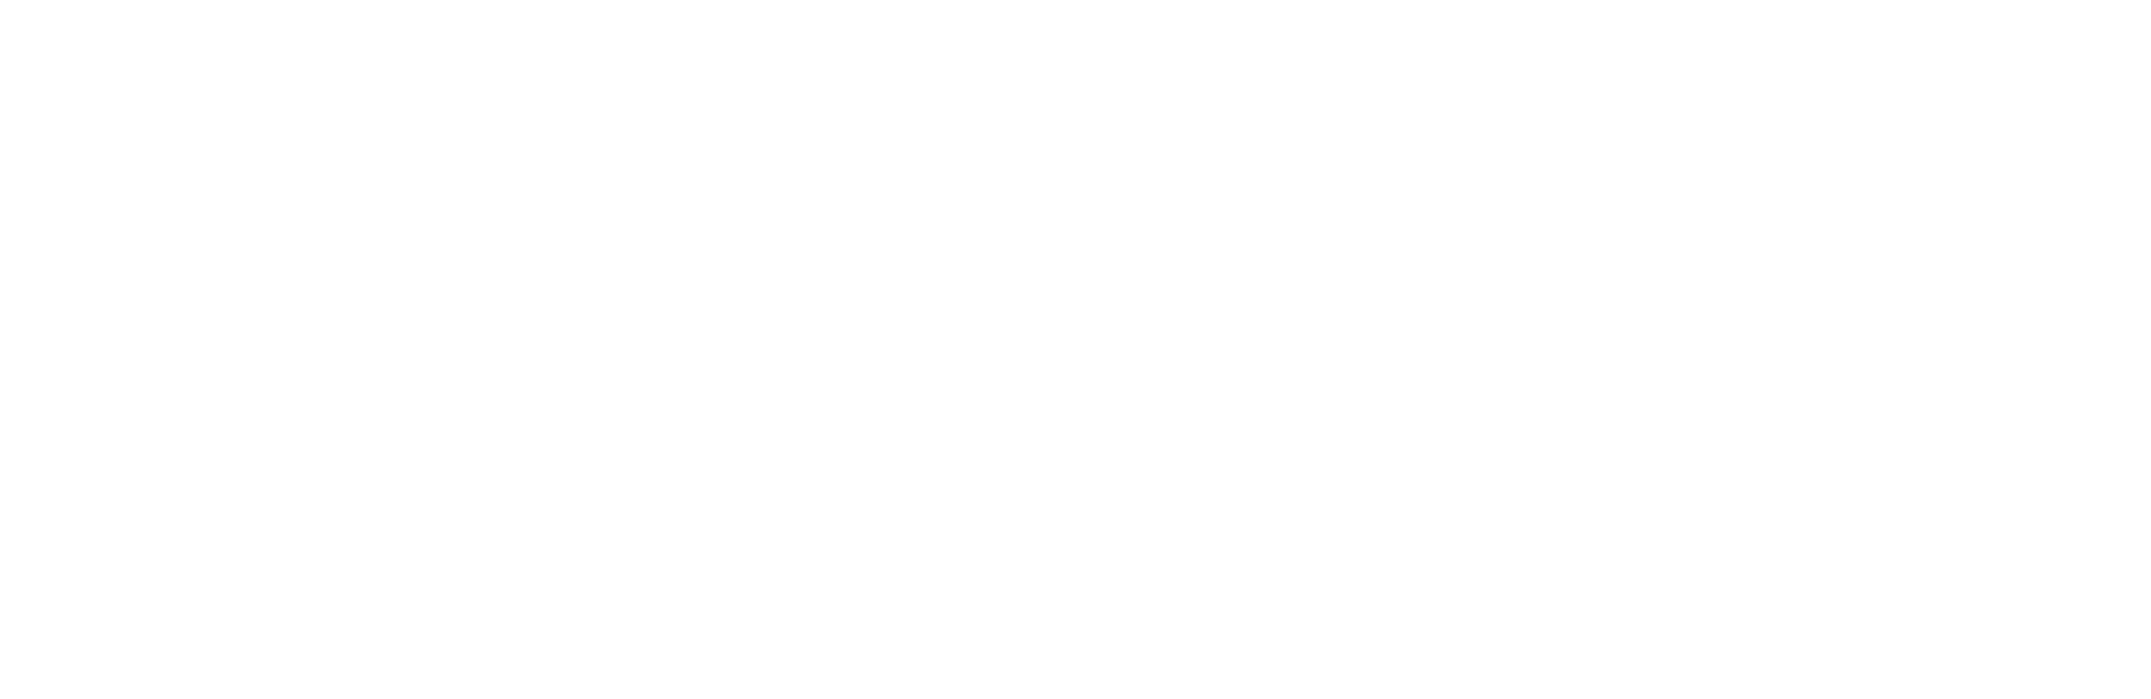 H.E. Cannon Floral & Greenhouses, Inc. - Arlington - Arlington, TX 76011 - (817)261-2731 | ShowMeLocal.com